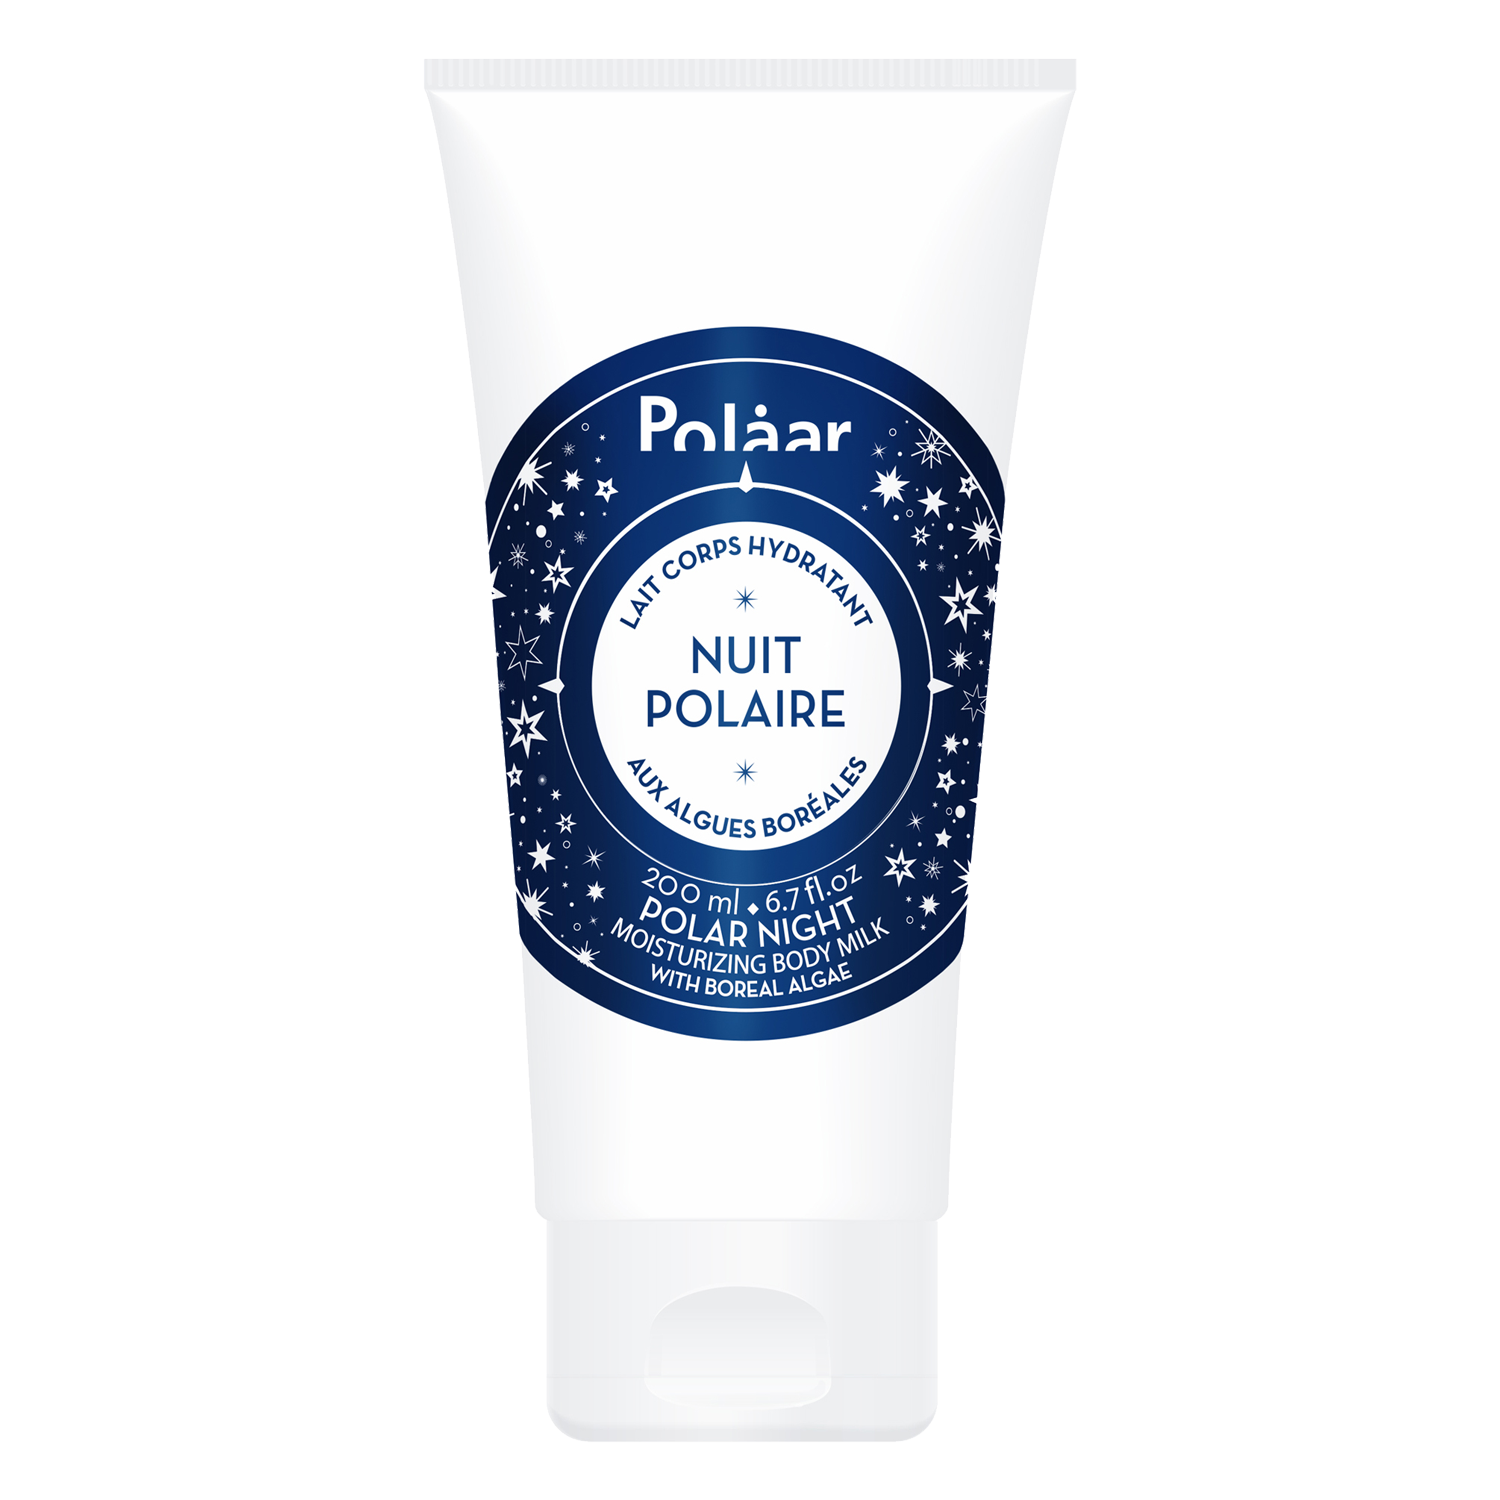 Polaar - Polar Night Moisturizing Body Milk with Boreal Algae -  1